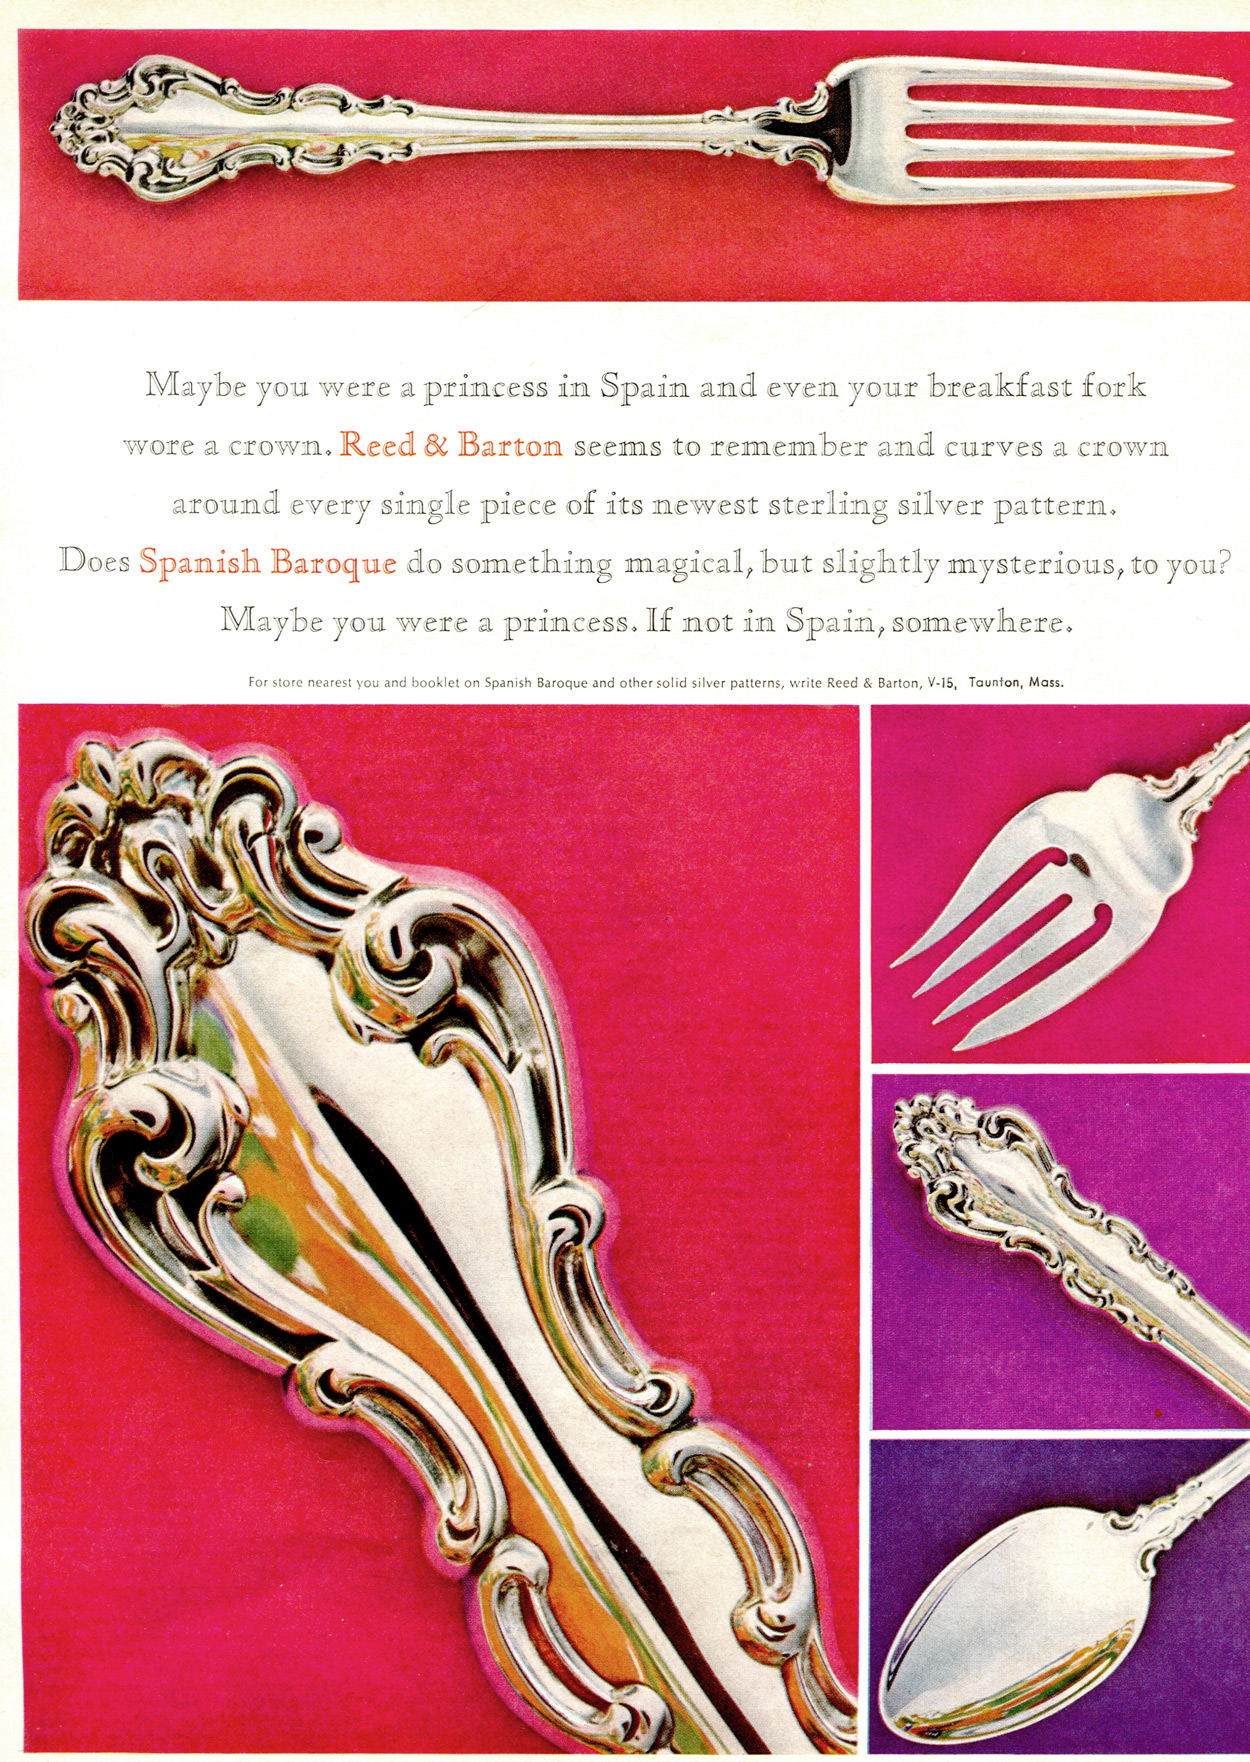 Spanish Baroque 1960s ad Silver